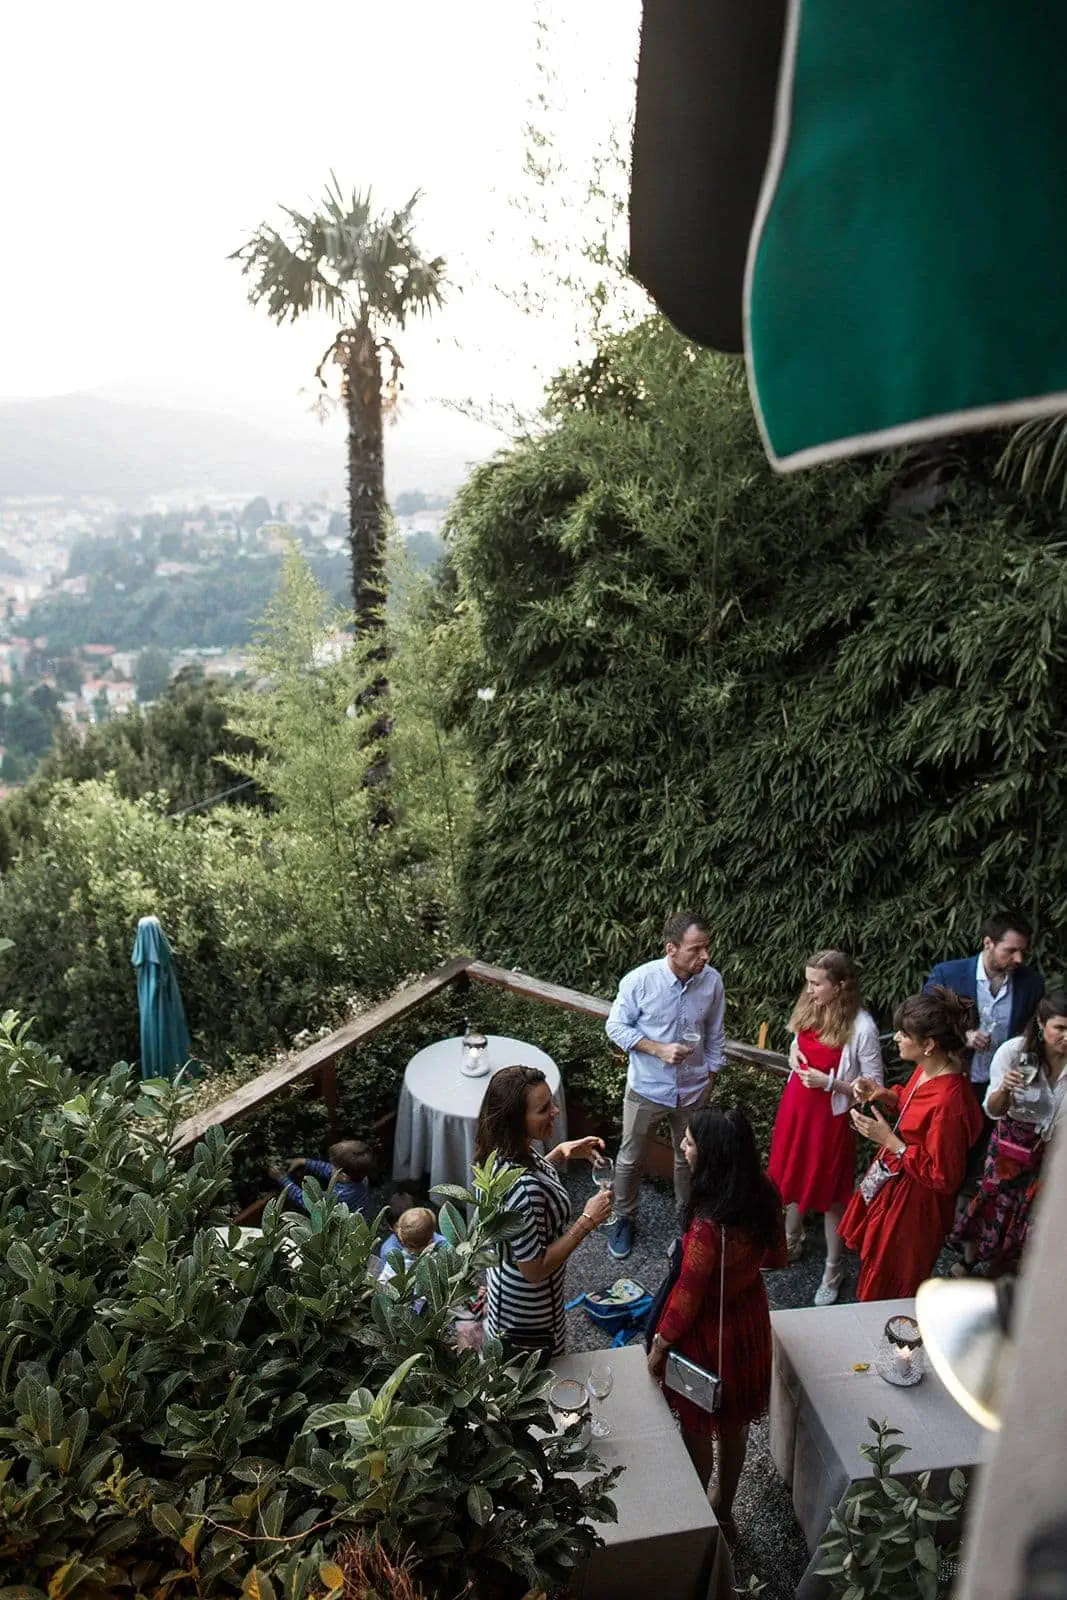 Gatto Nero's outdoor terrace overlooking Lake Como